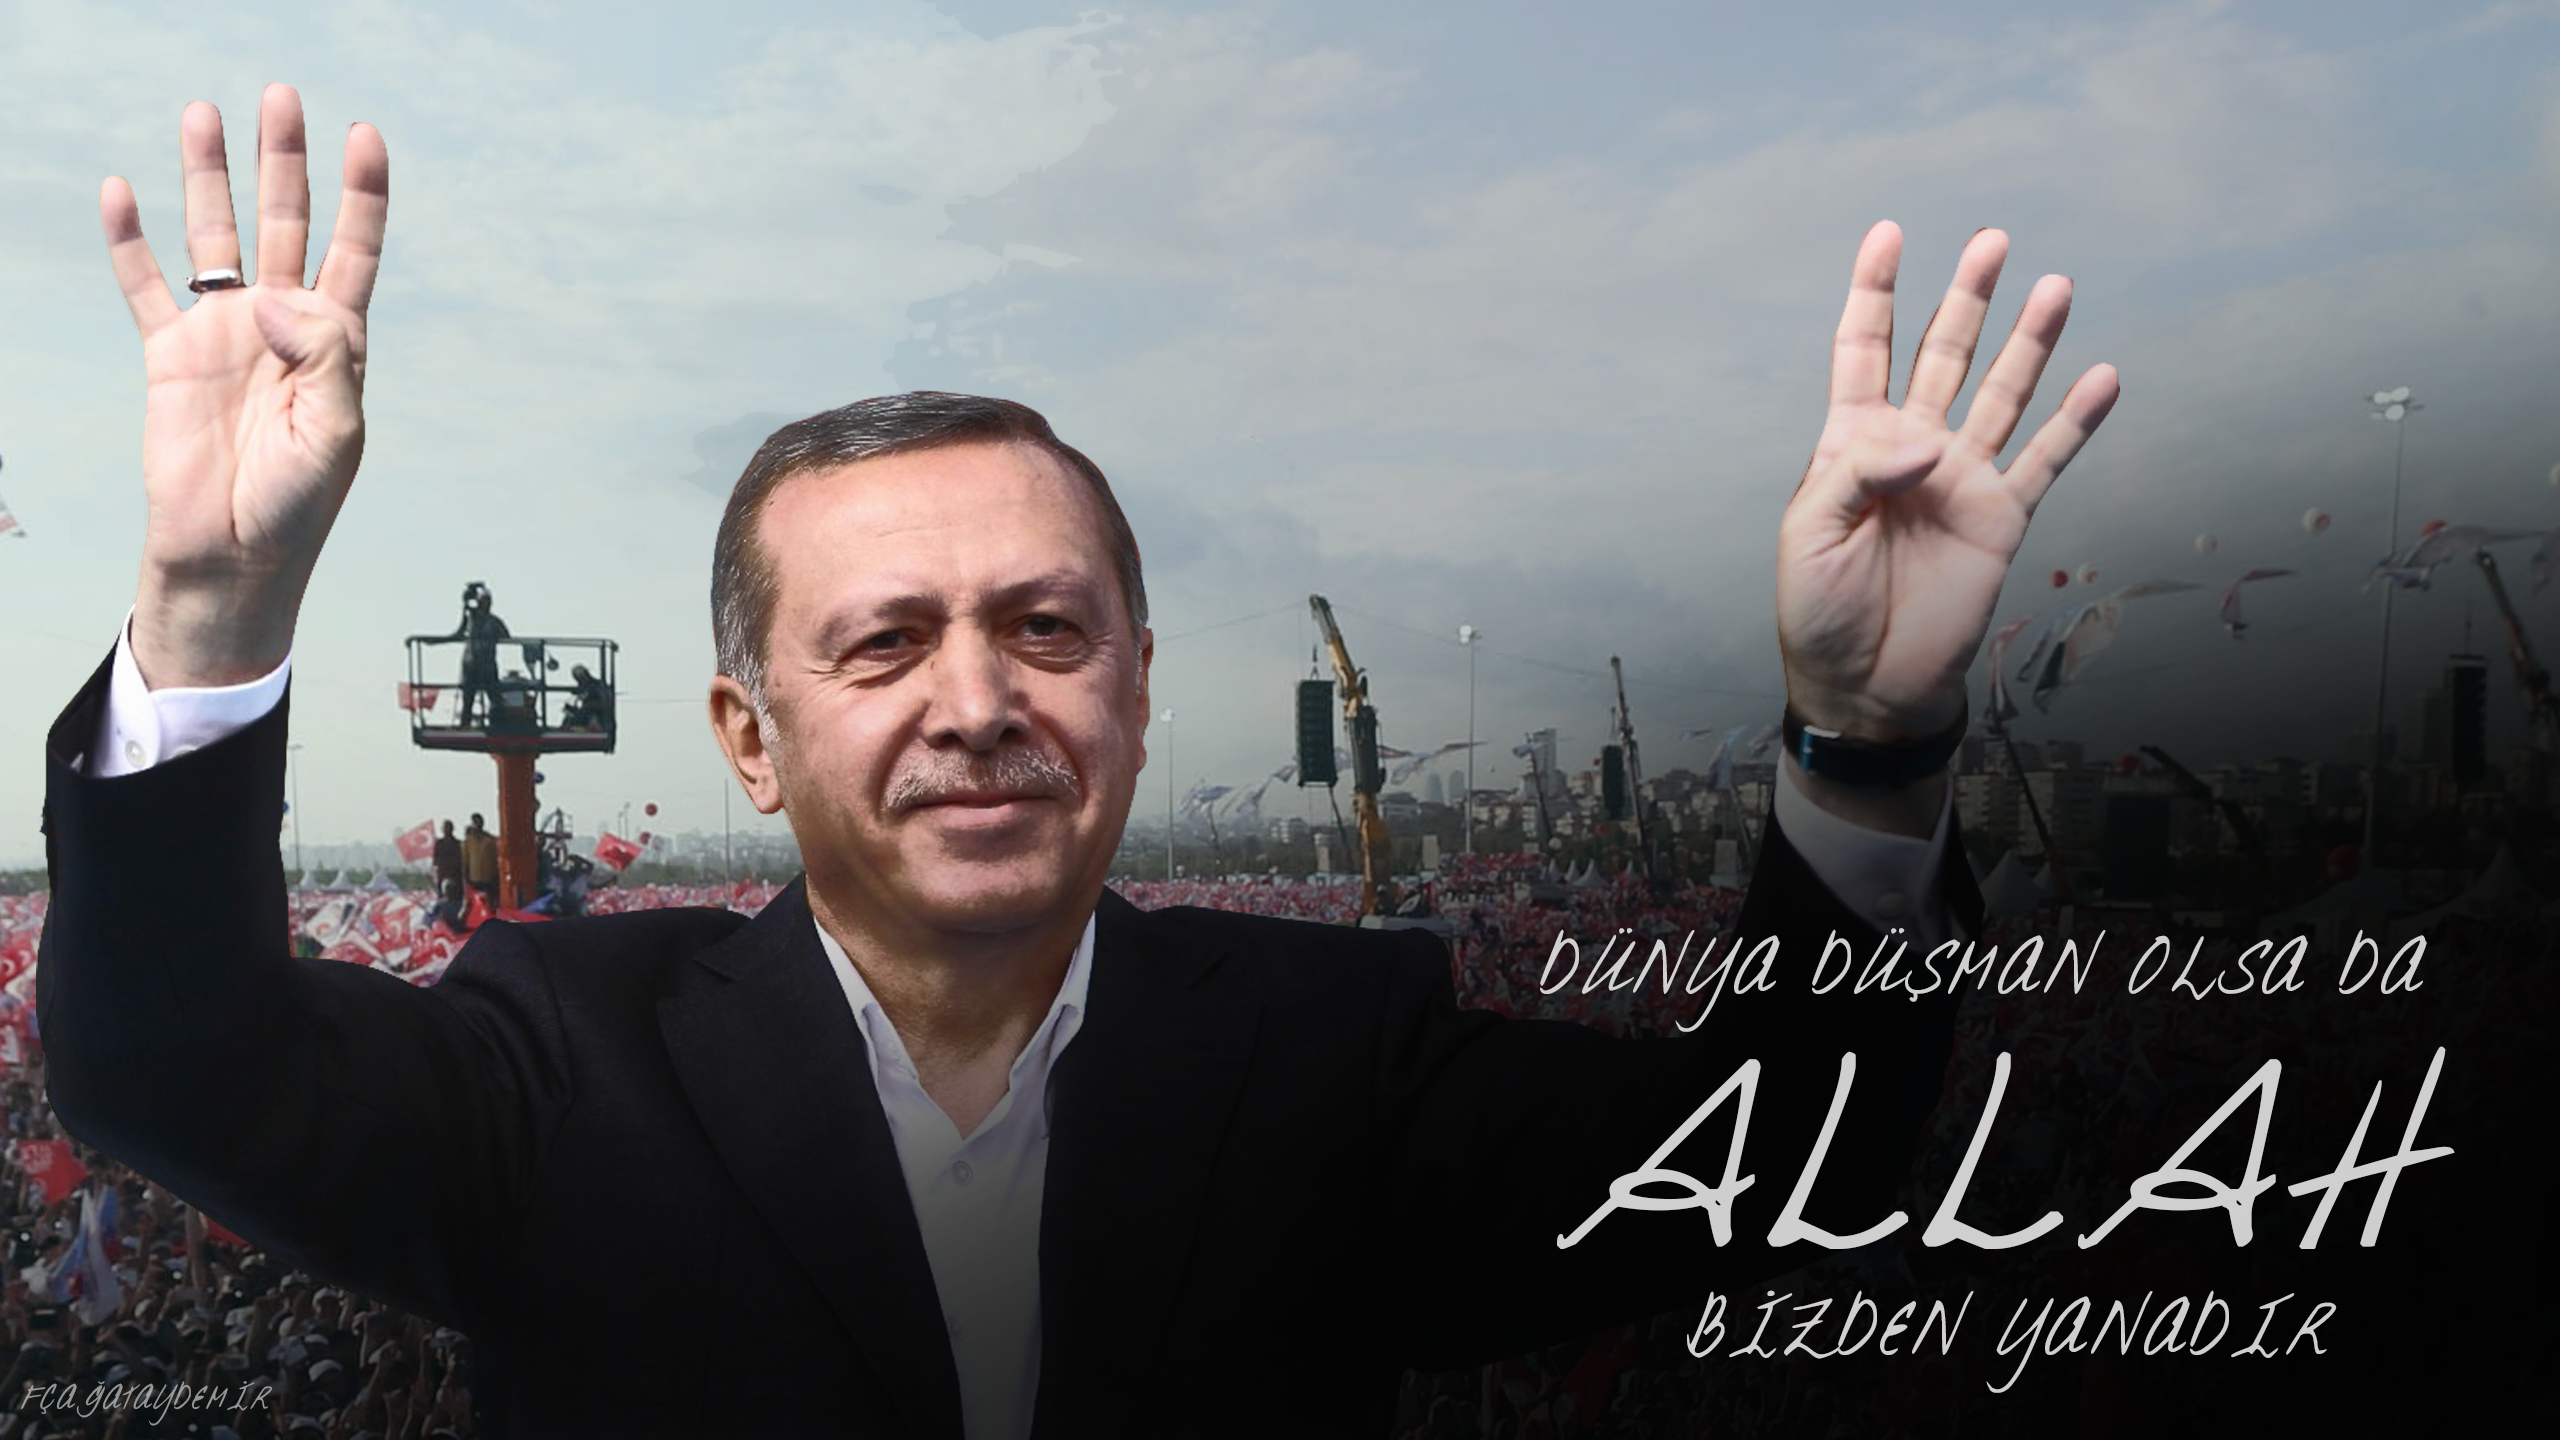 tayyip erdogan wallpaper desktop. HD Wallpaper, HD image, HD